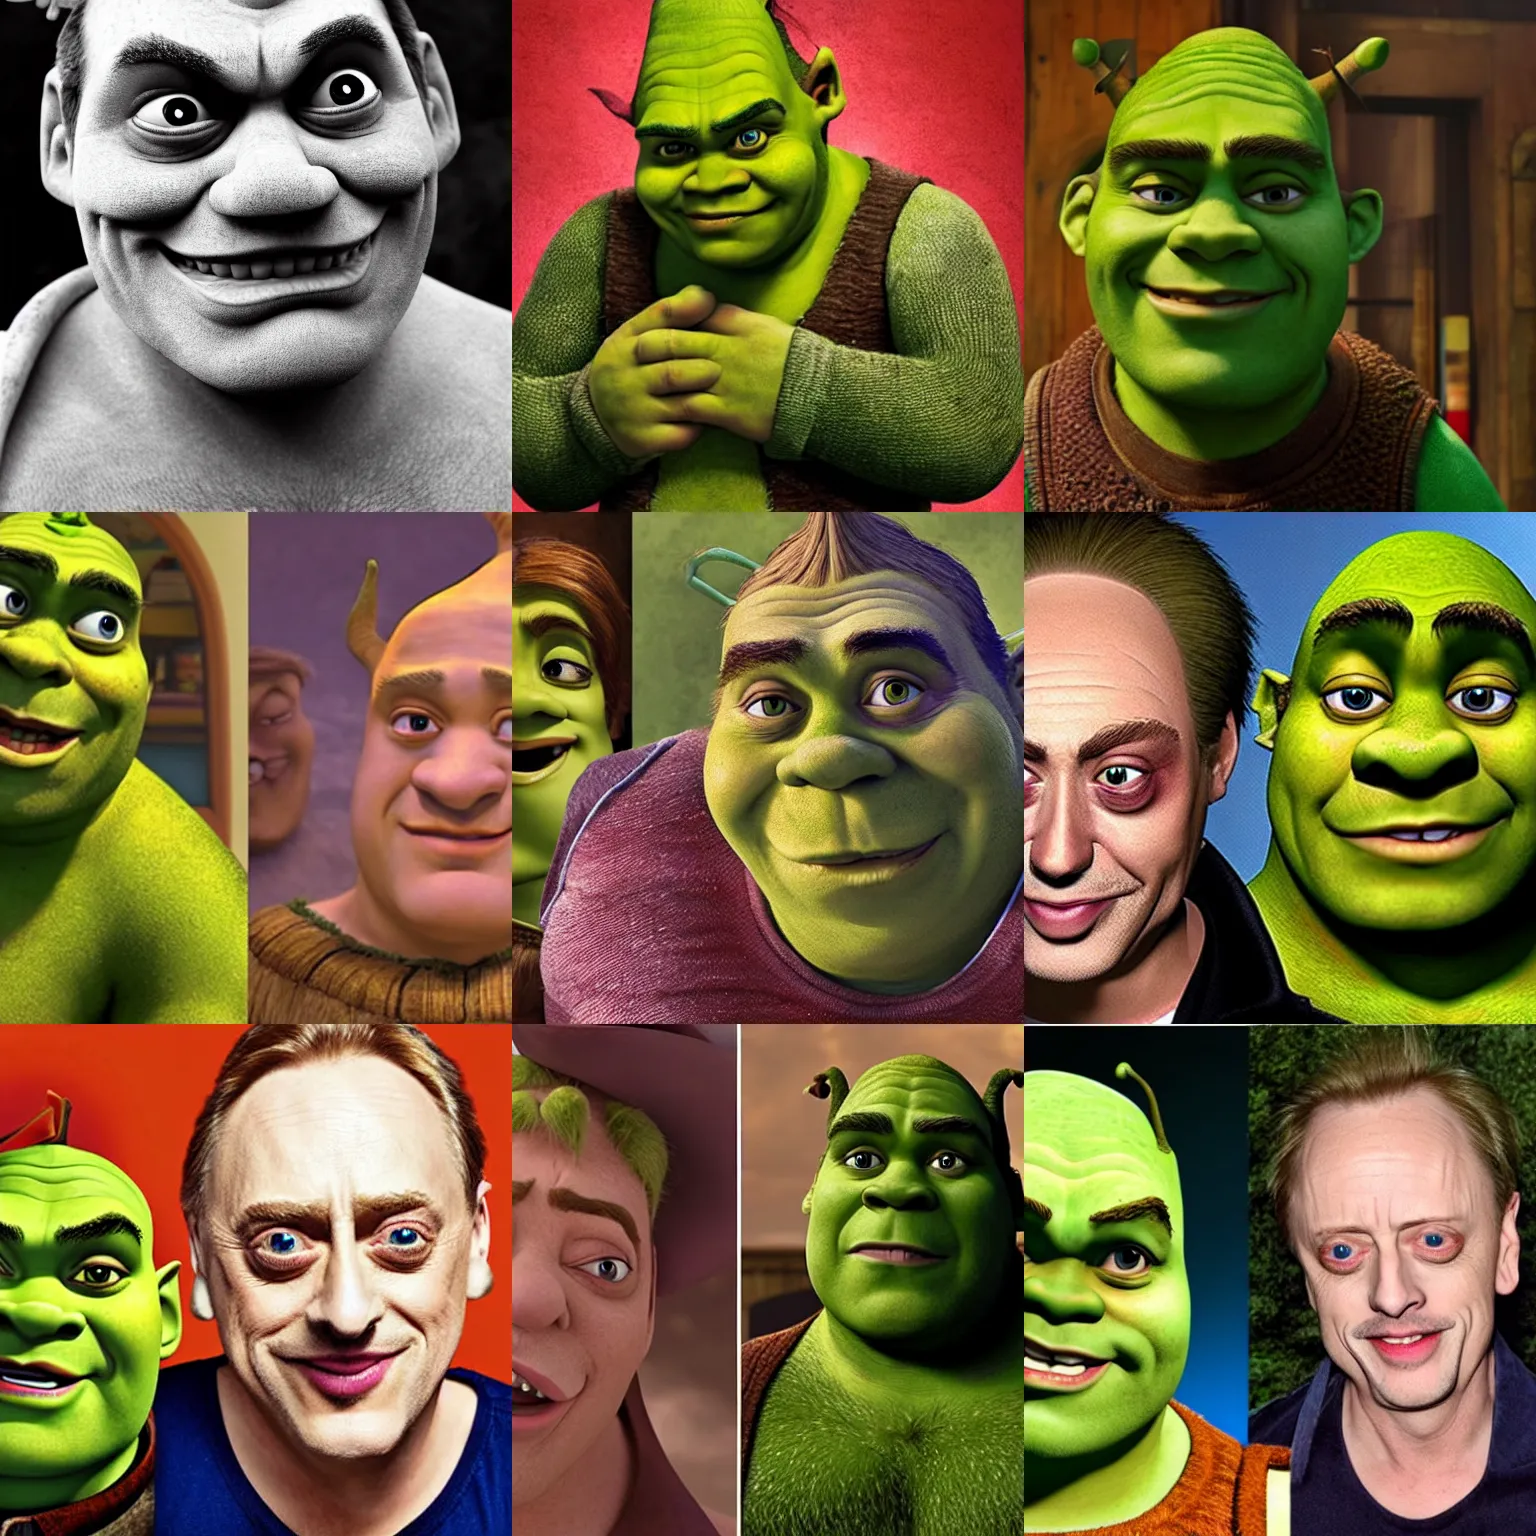 Prompt: Steeve Buscemi as Shrek